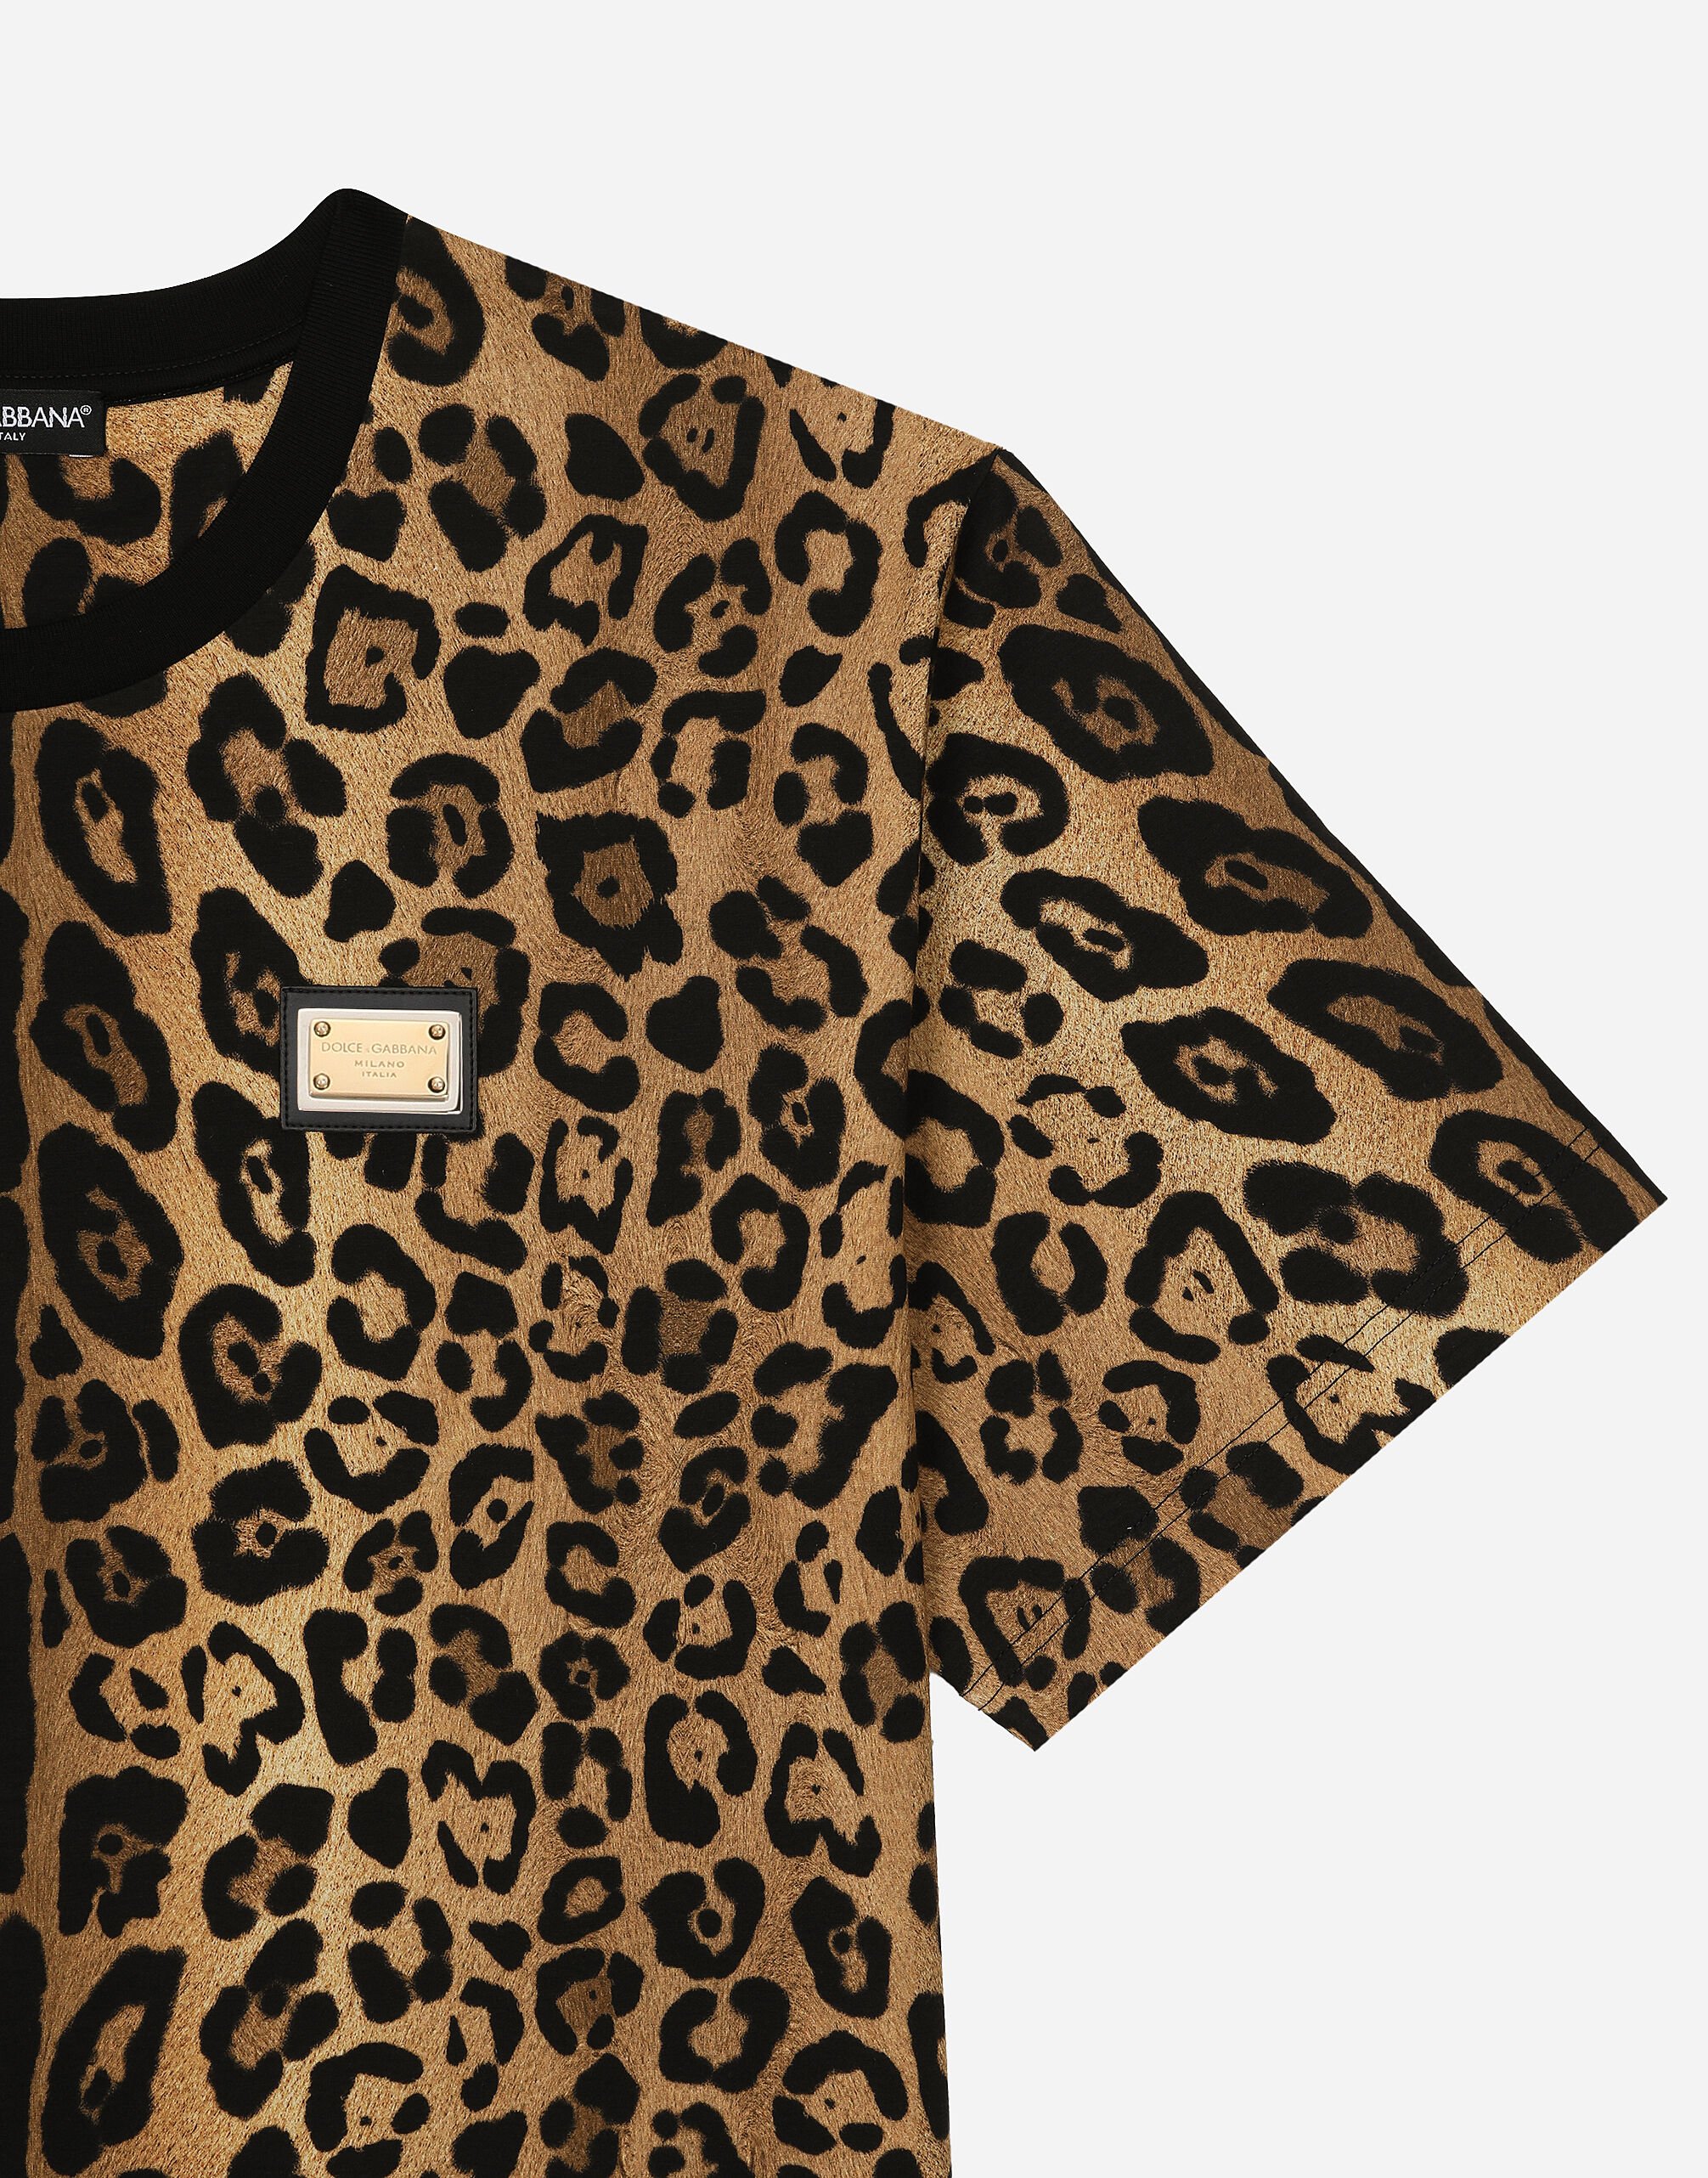 Dolce&Gabbana Leopard mascot soft toy male Multicolor